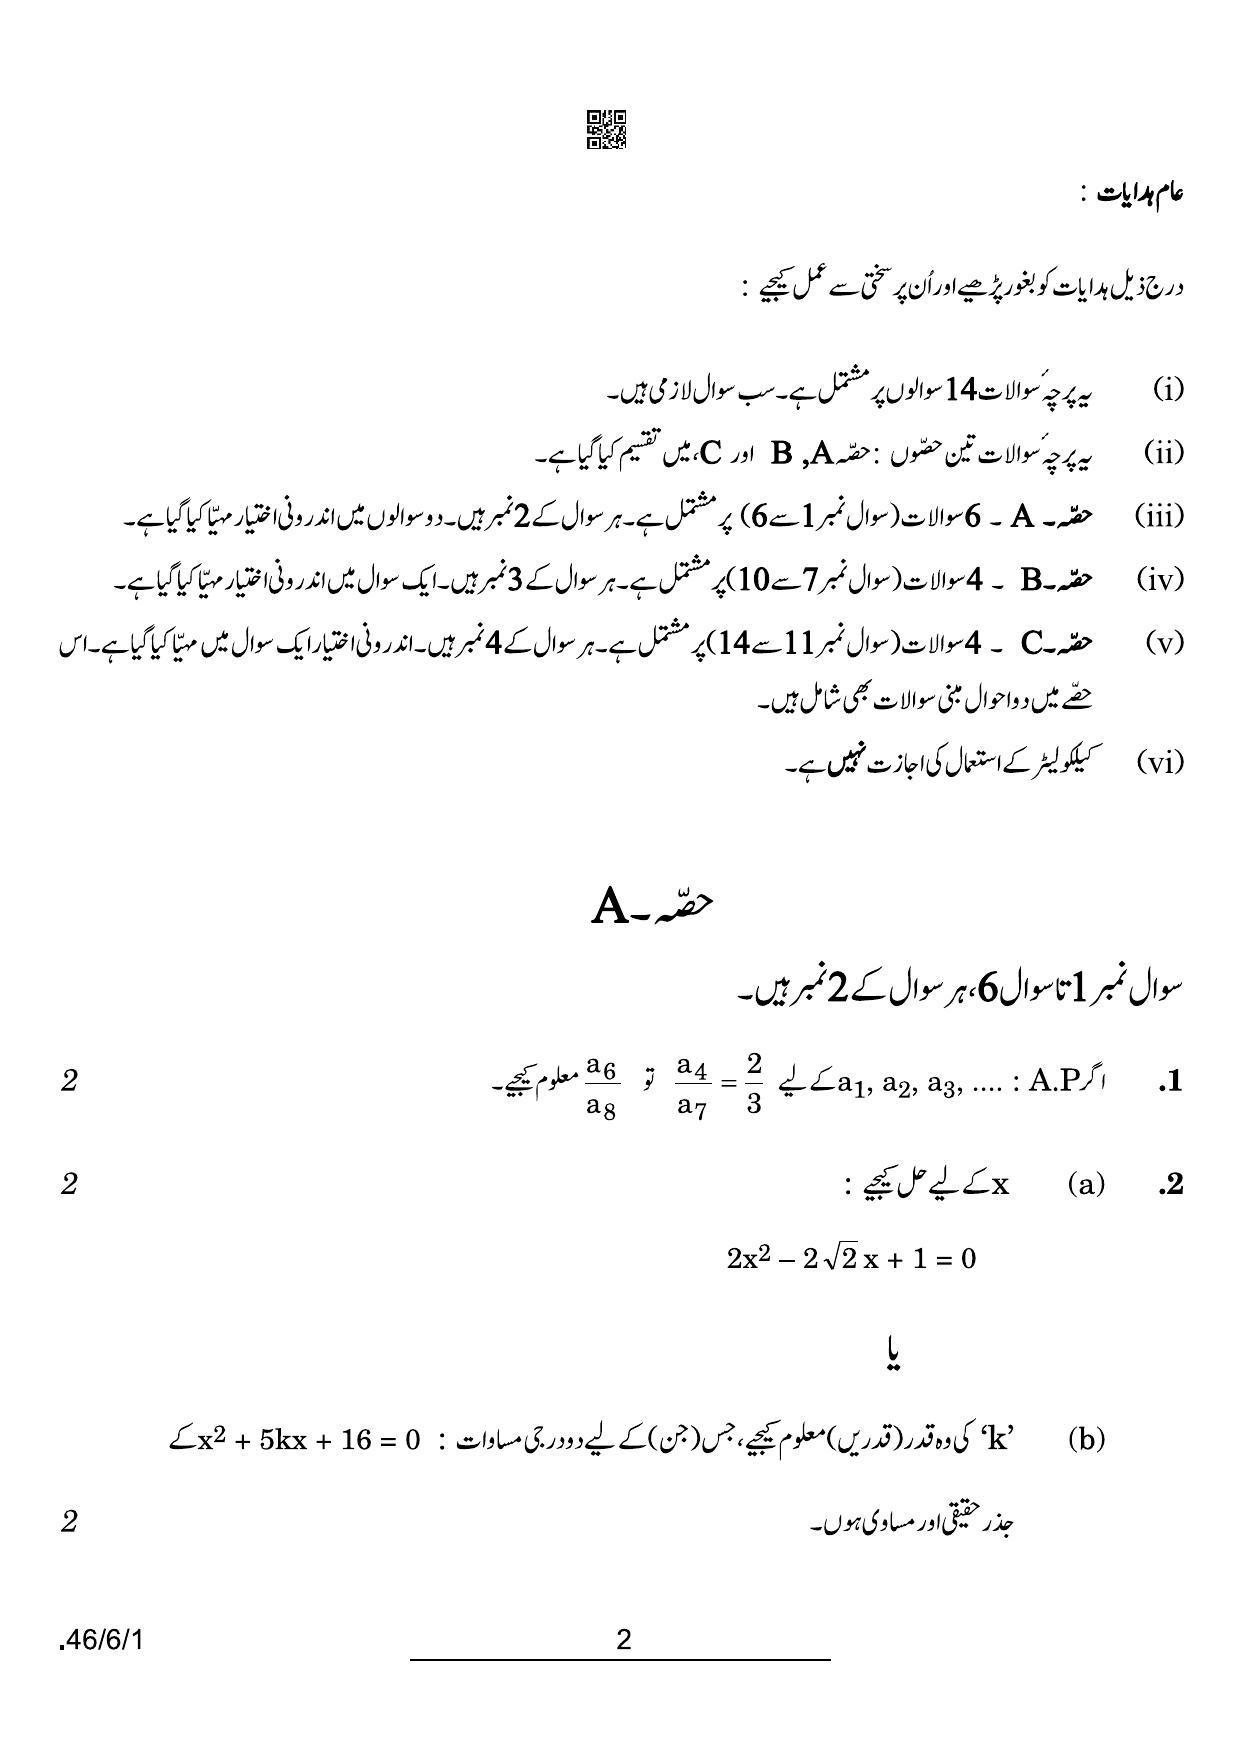 CBSE Class 10 46-6-1 Maths Standard Urdu 2022 Compartment Question Paper - Page 2